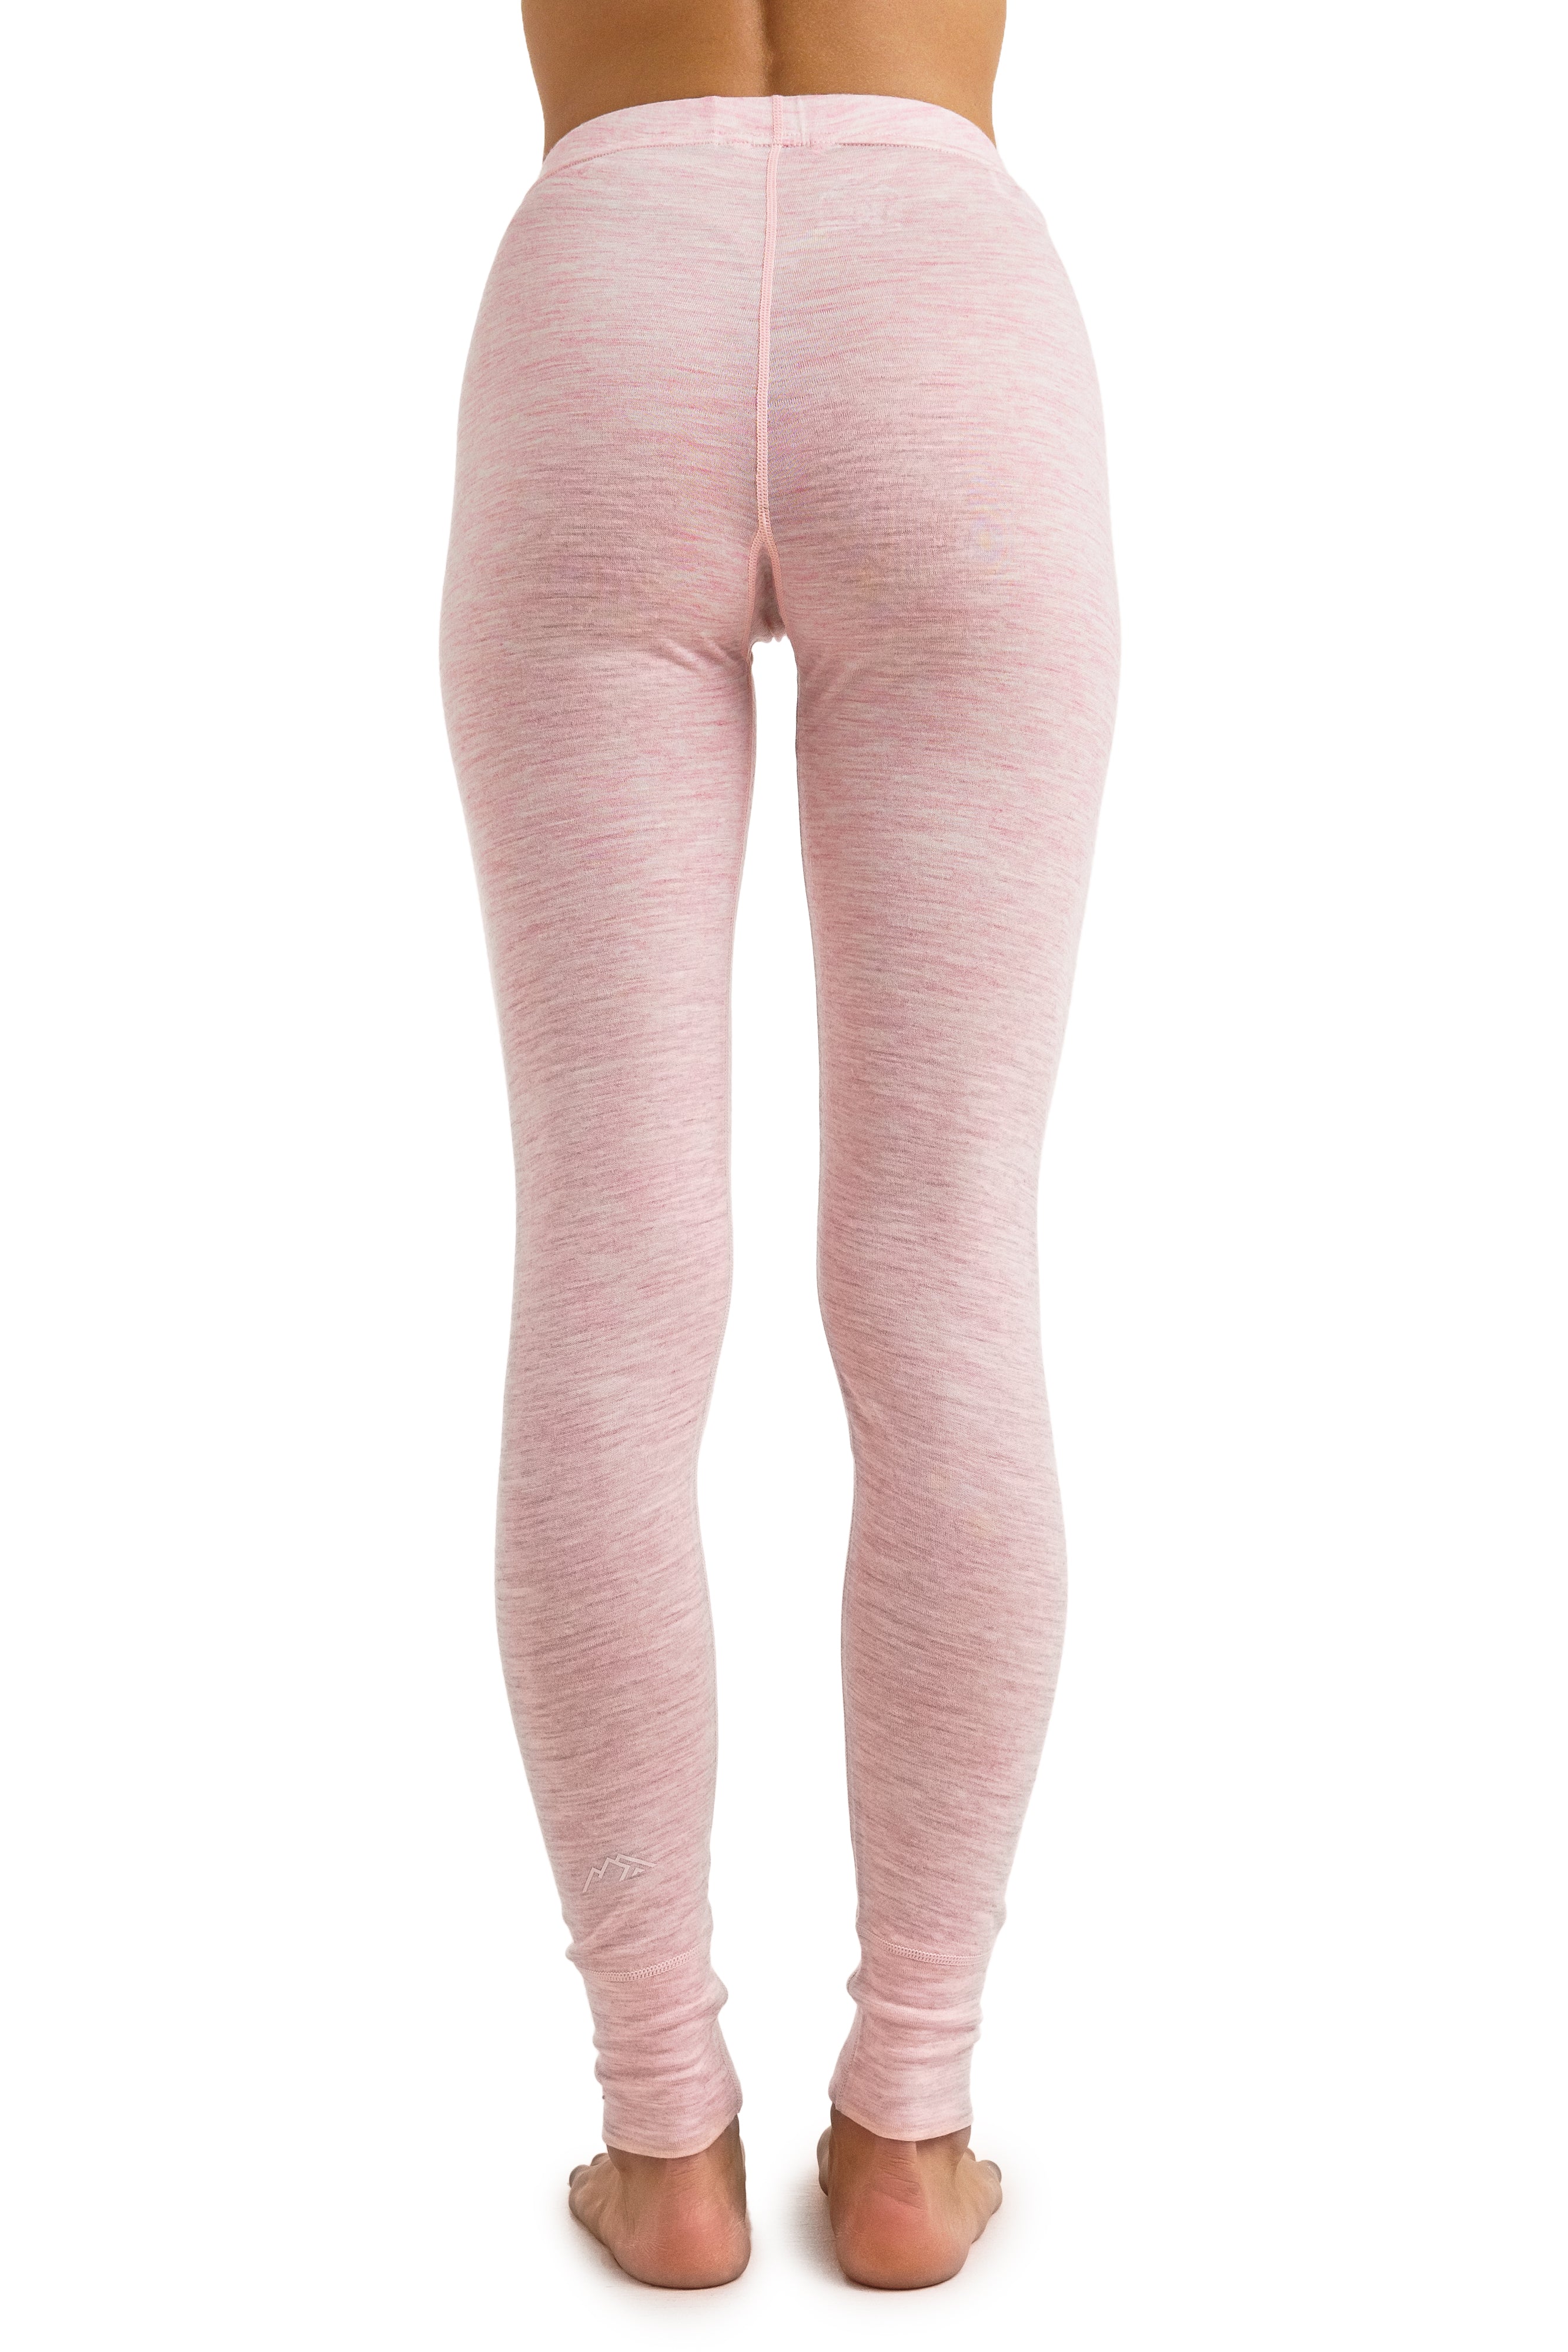 Women's Merino Wool Pants - Base Layer Pink Heather, Bottom, Underwear, Thermal  Leggings, Lightweight